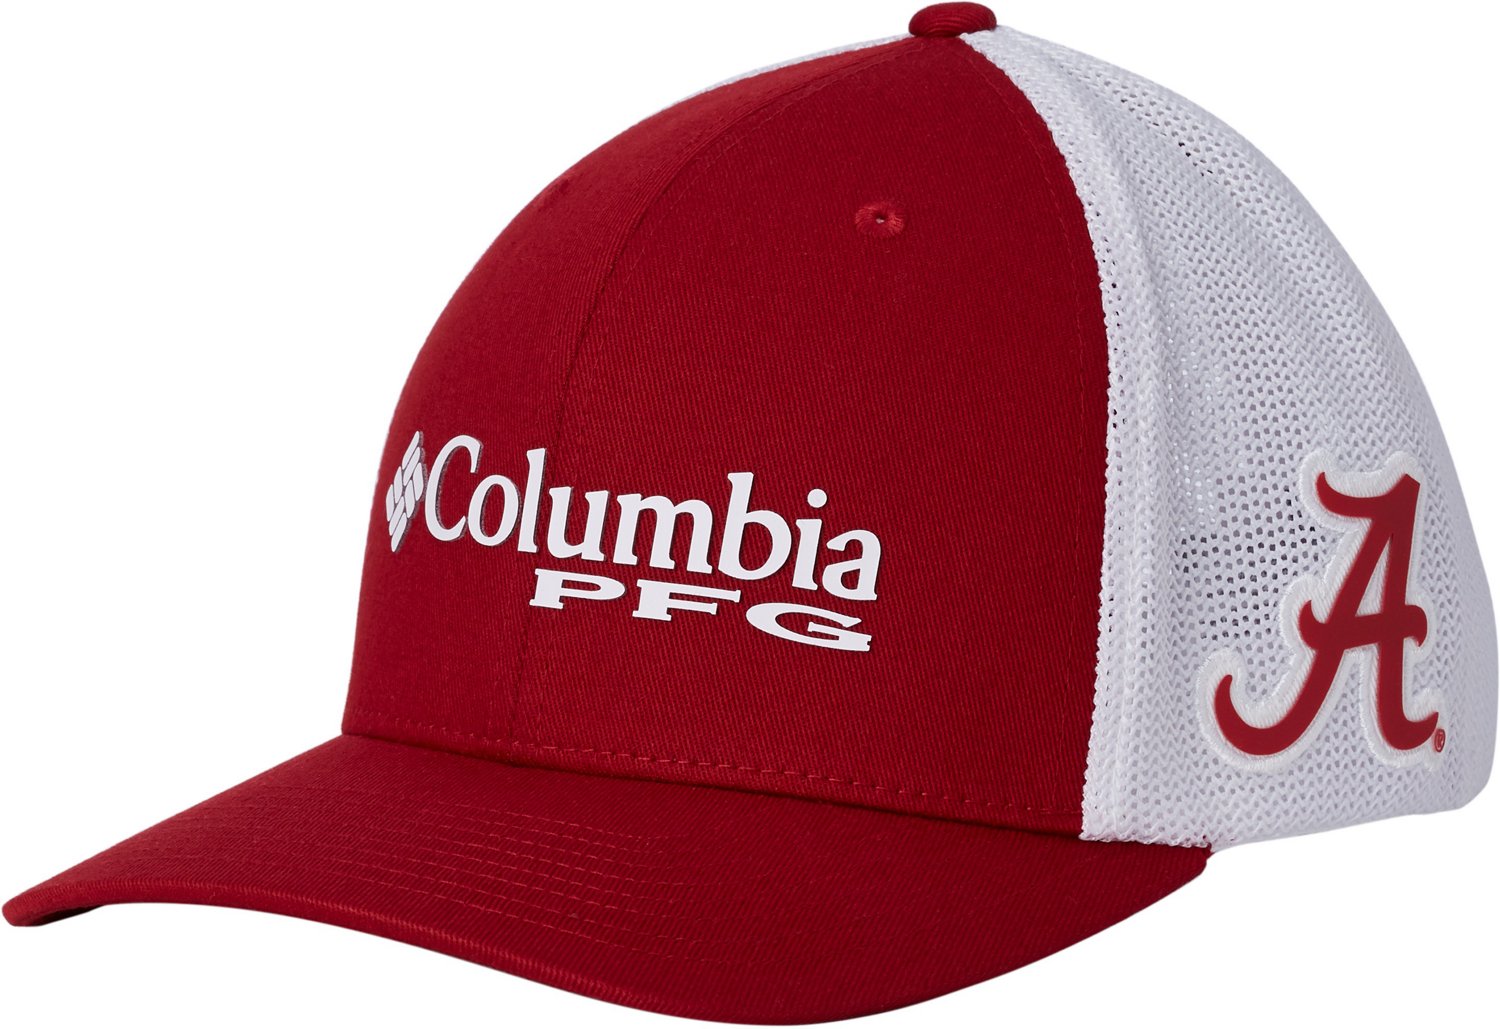 Columbia Sportswear Men's University of Alabama Collegiate PFG Mesh Ball Cap